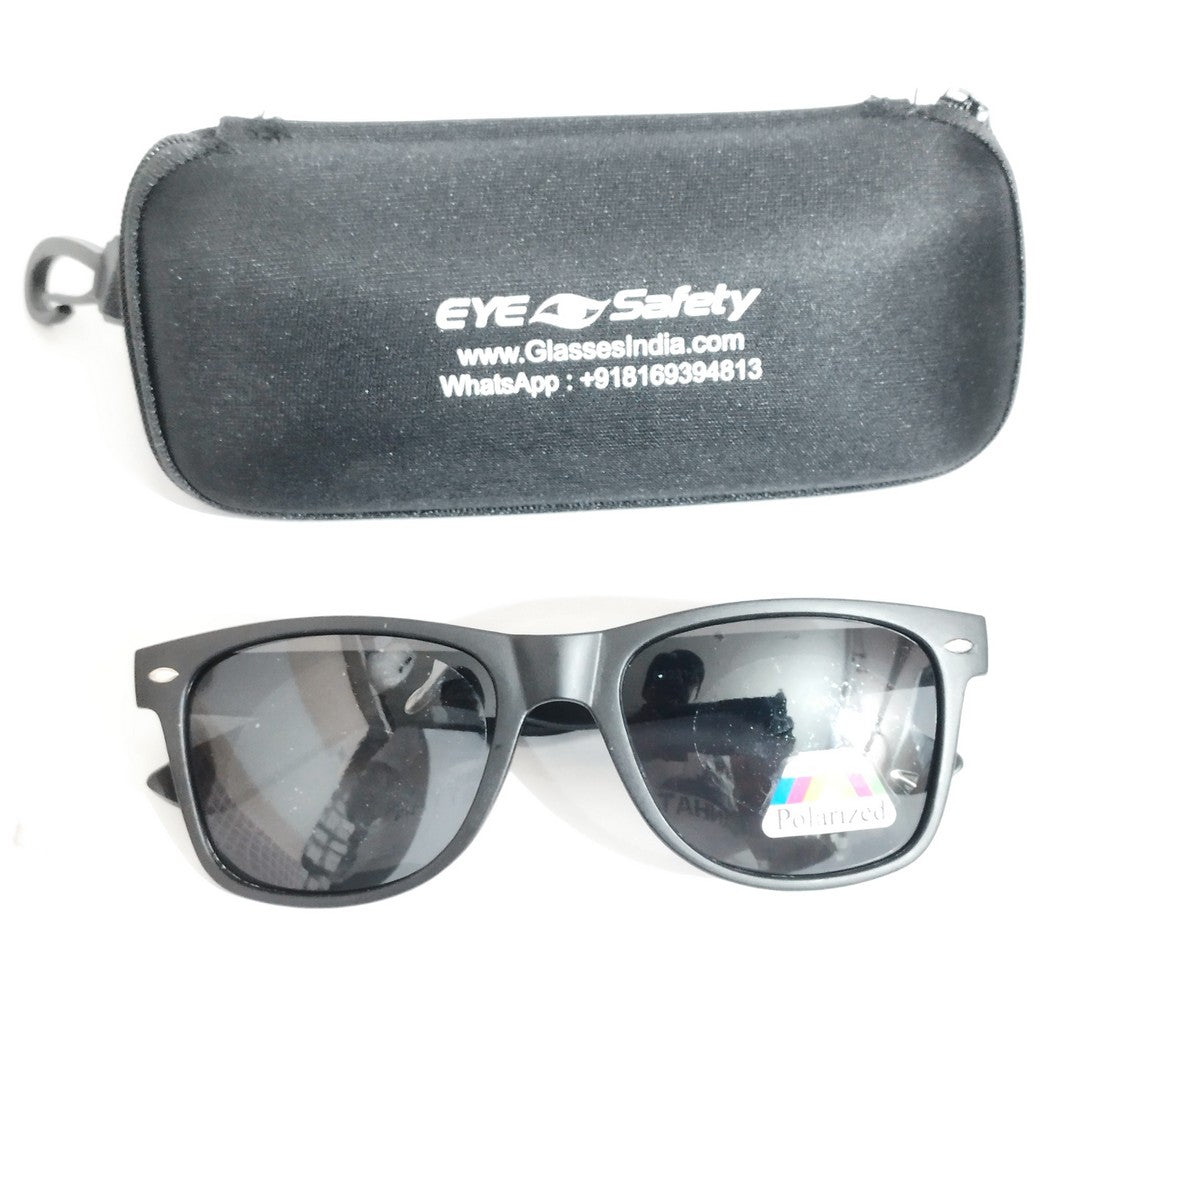 Black Classic Polarized Sunglasses for Men and Women